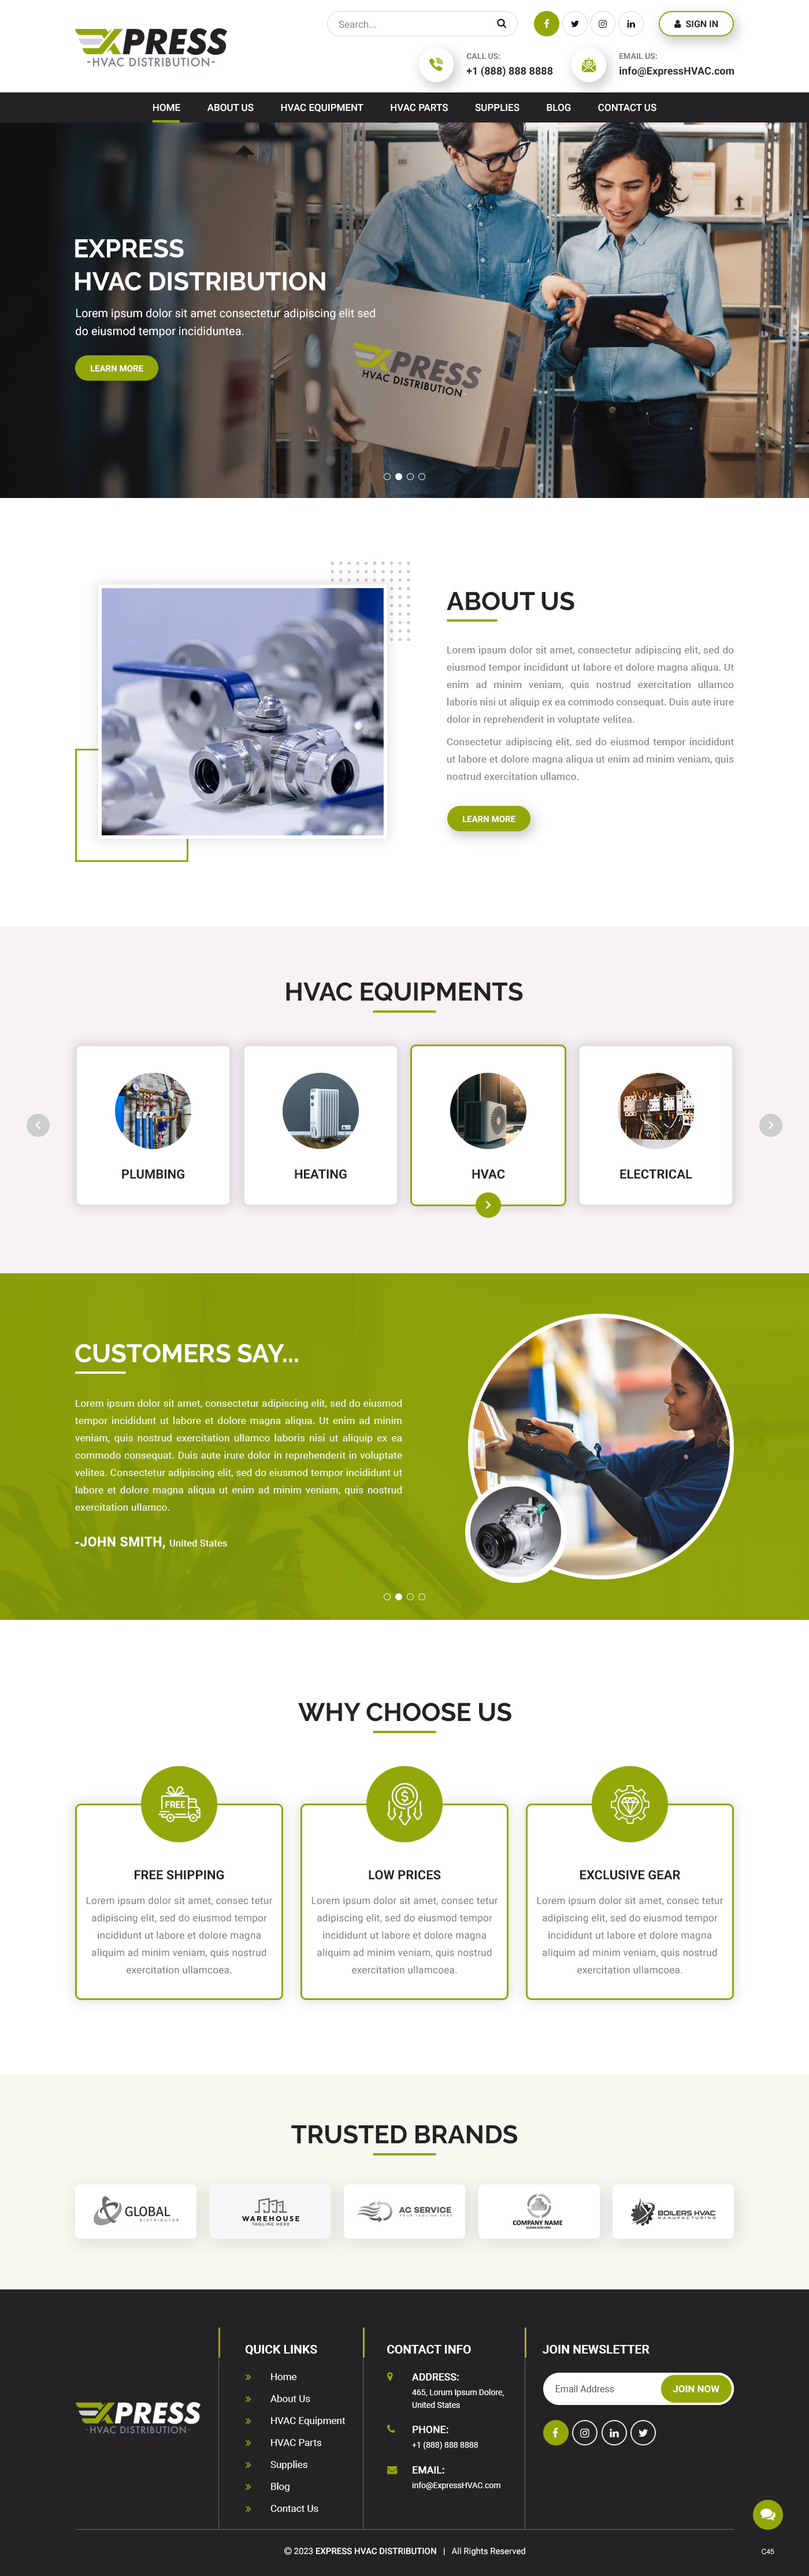 HVAC distributor website design example